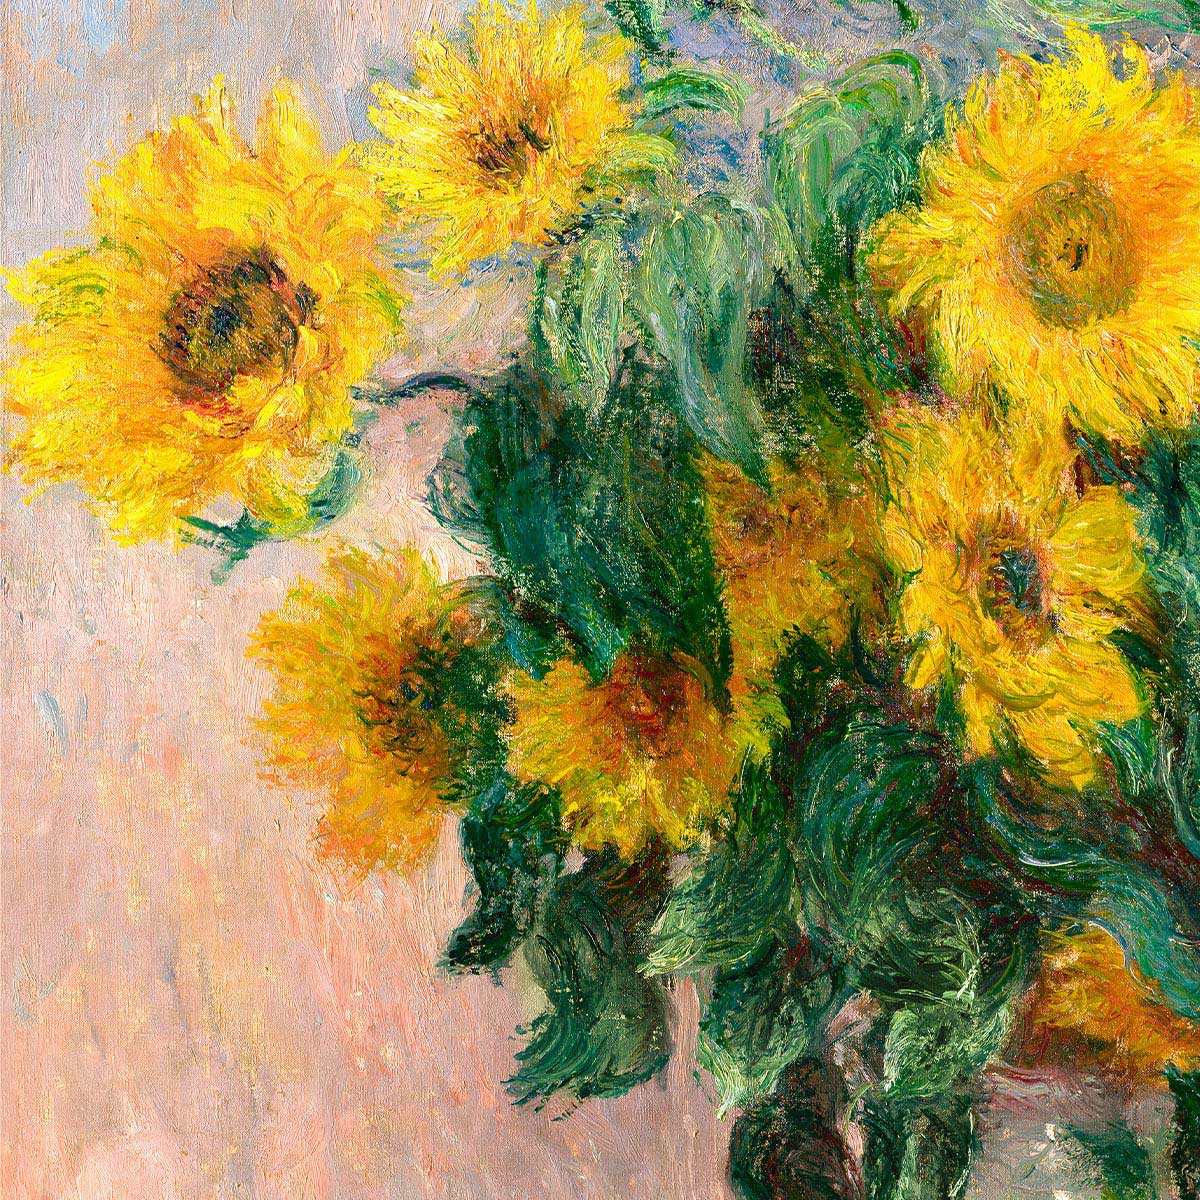 Bouquet of Sunflowers by Claude Monet Art Exhibition Poster